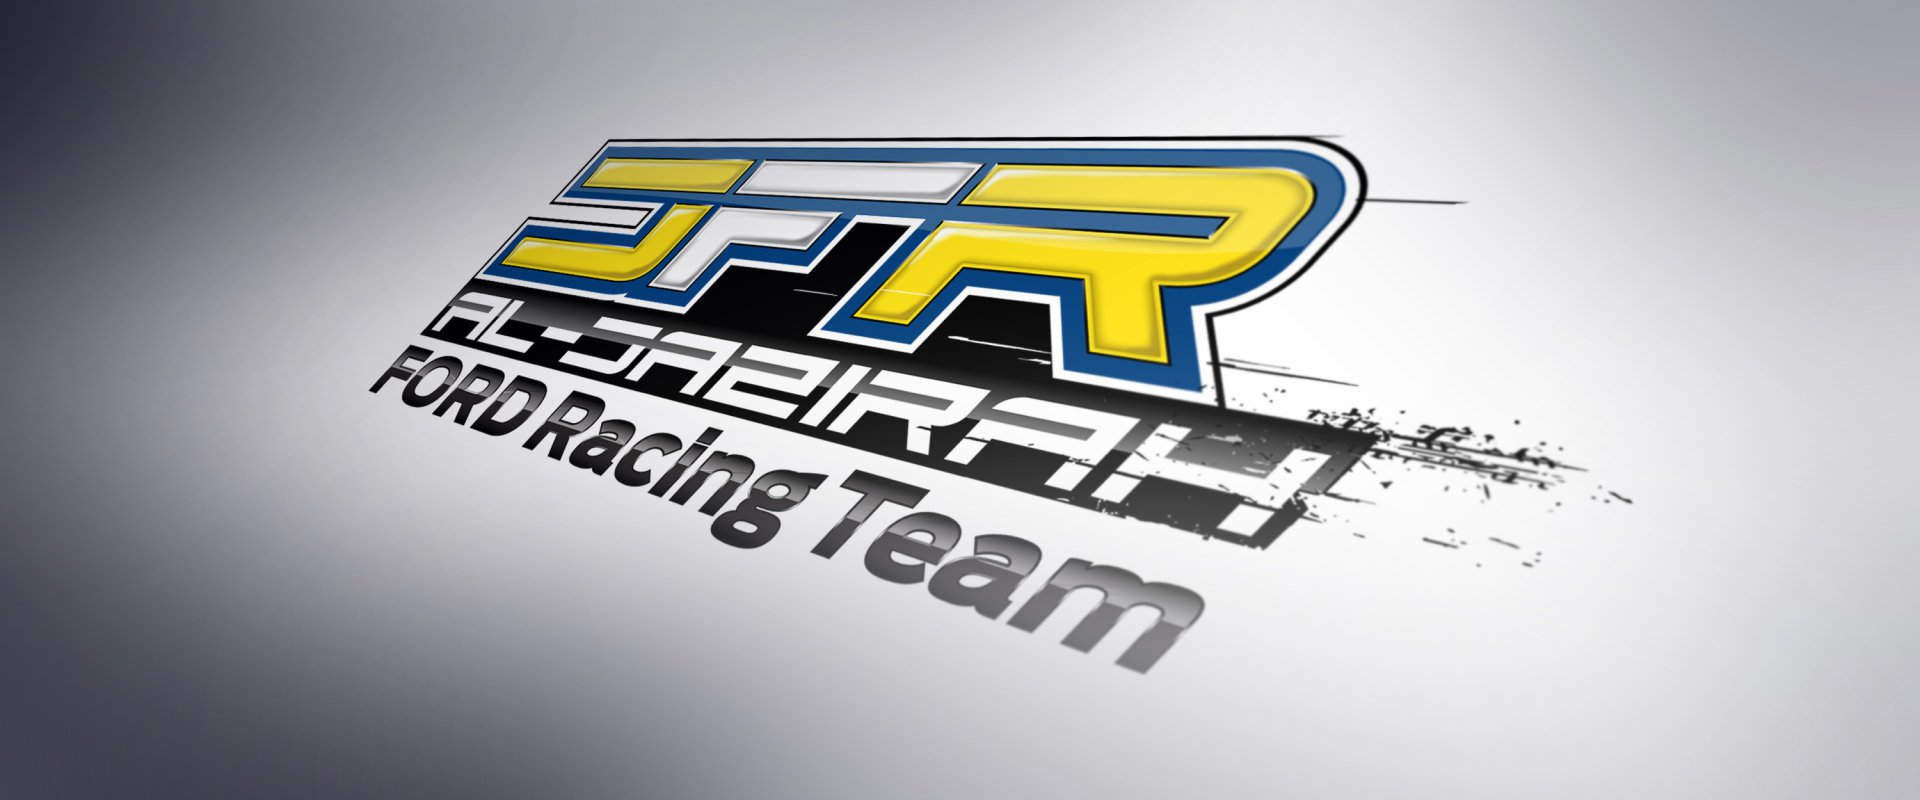 JFR Al Jazirah Ford Racing Team #3